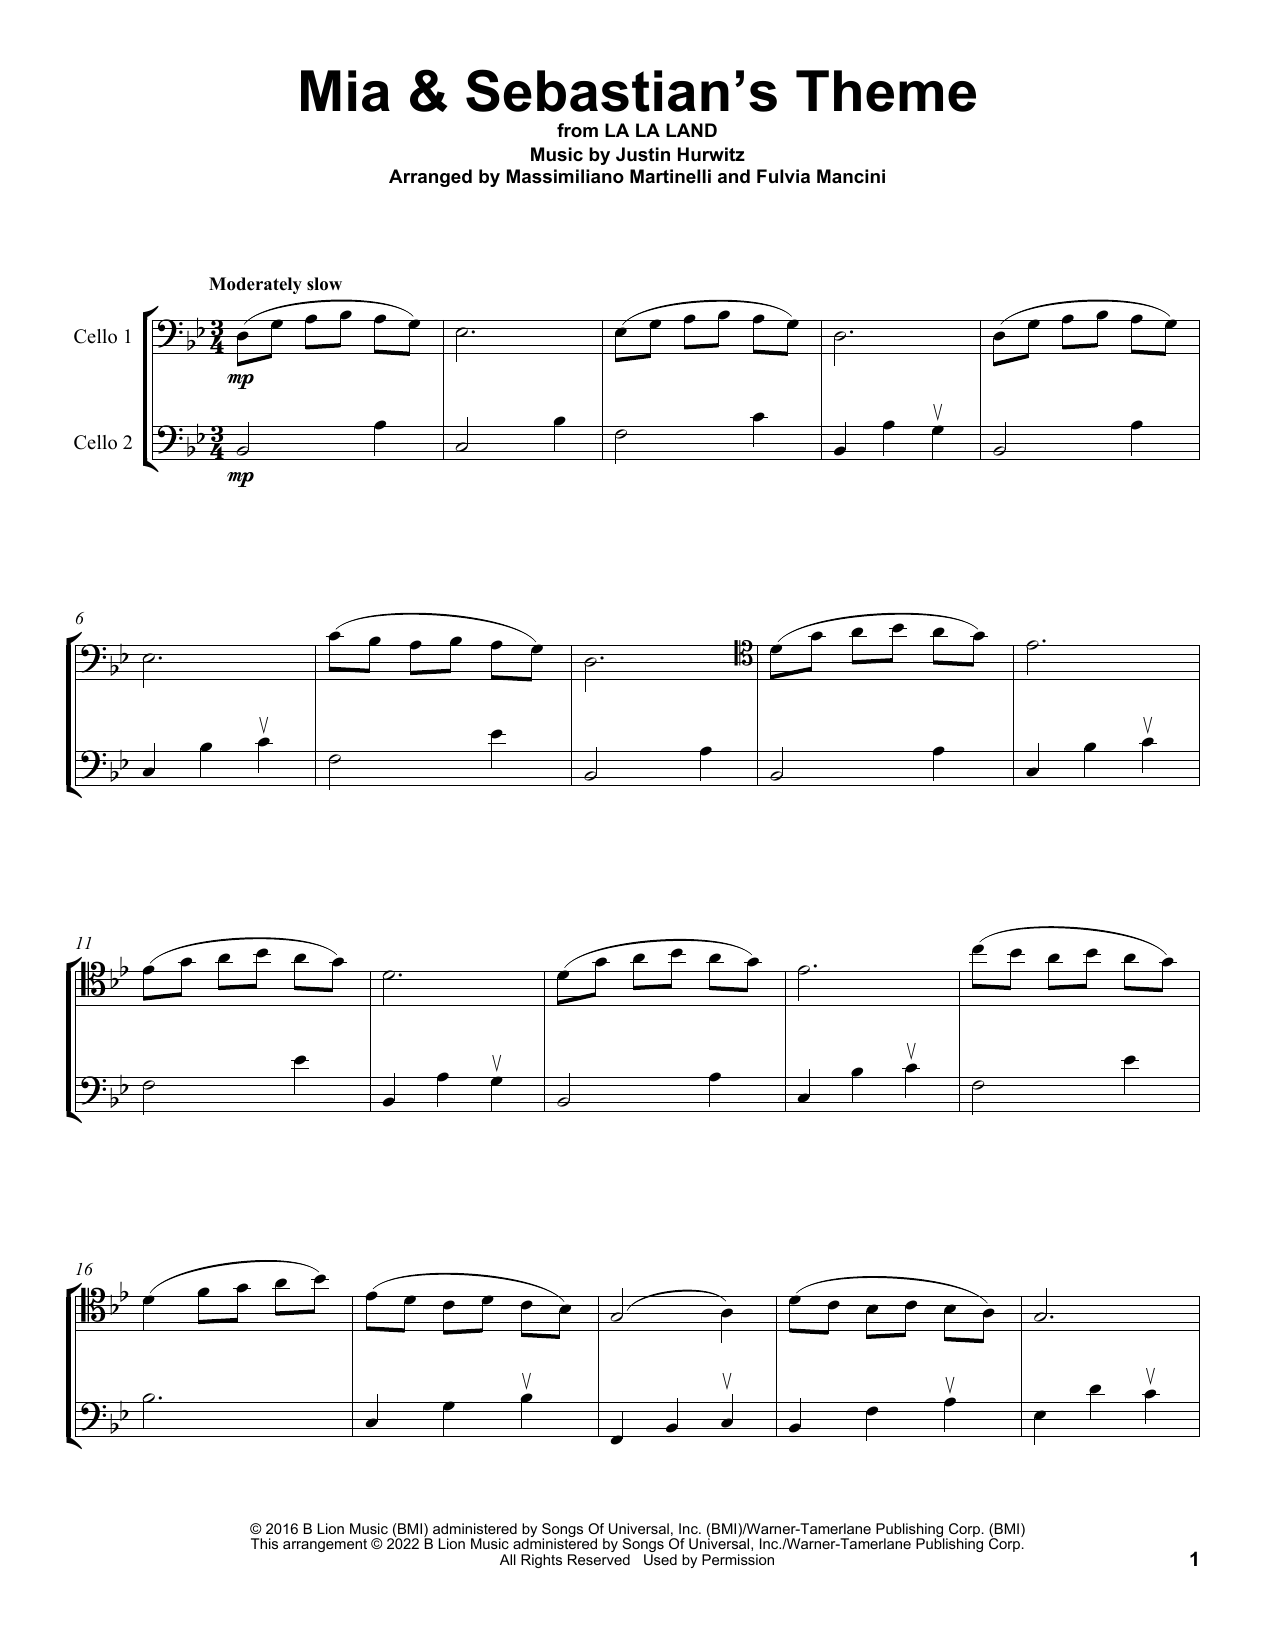 Mr & Mrs Cello Mia & Sebastian's Theme (from La La Land) Sheet Music Notes & Chords for Cello Duet - Download or Print PDF